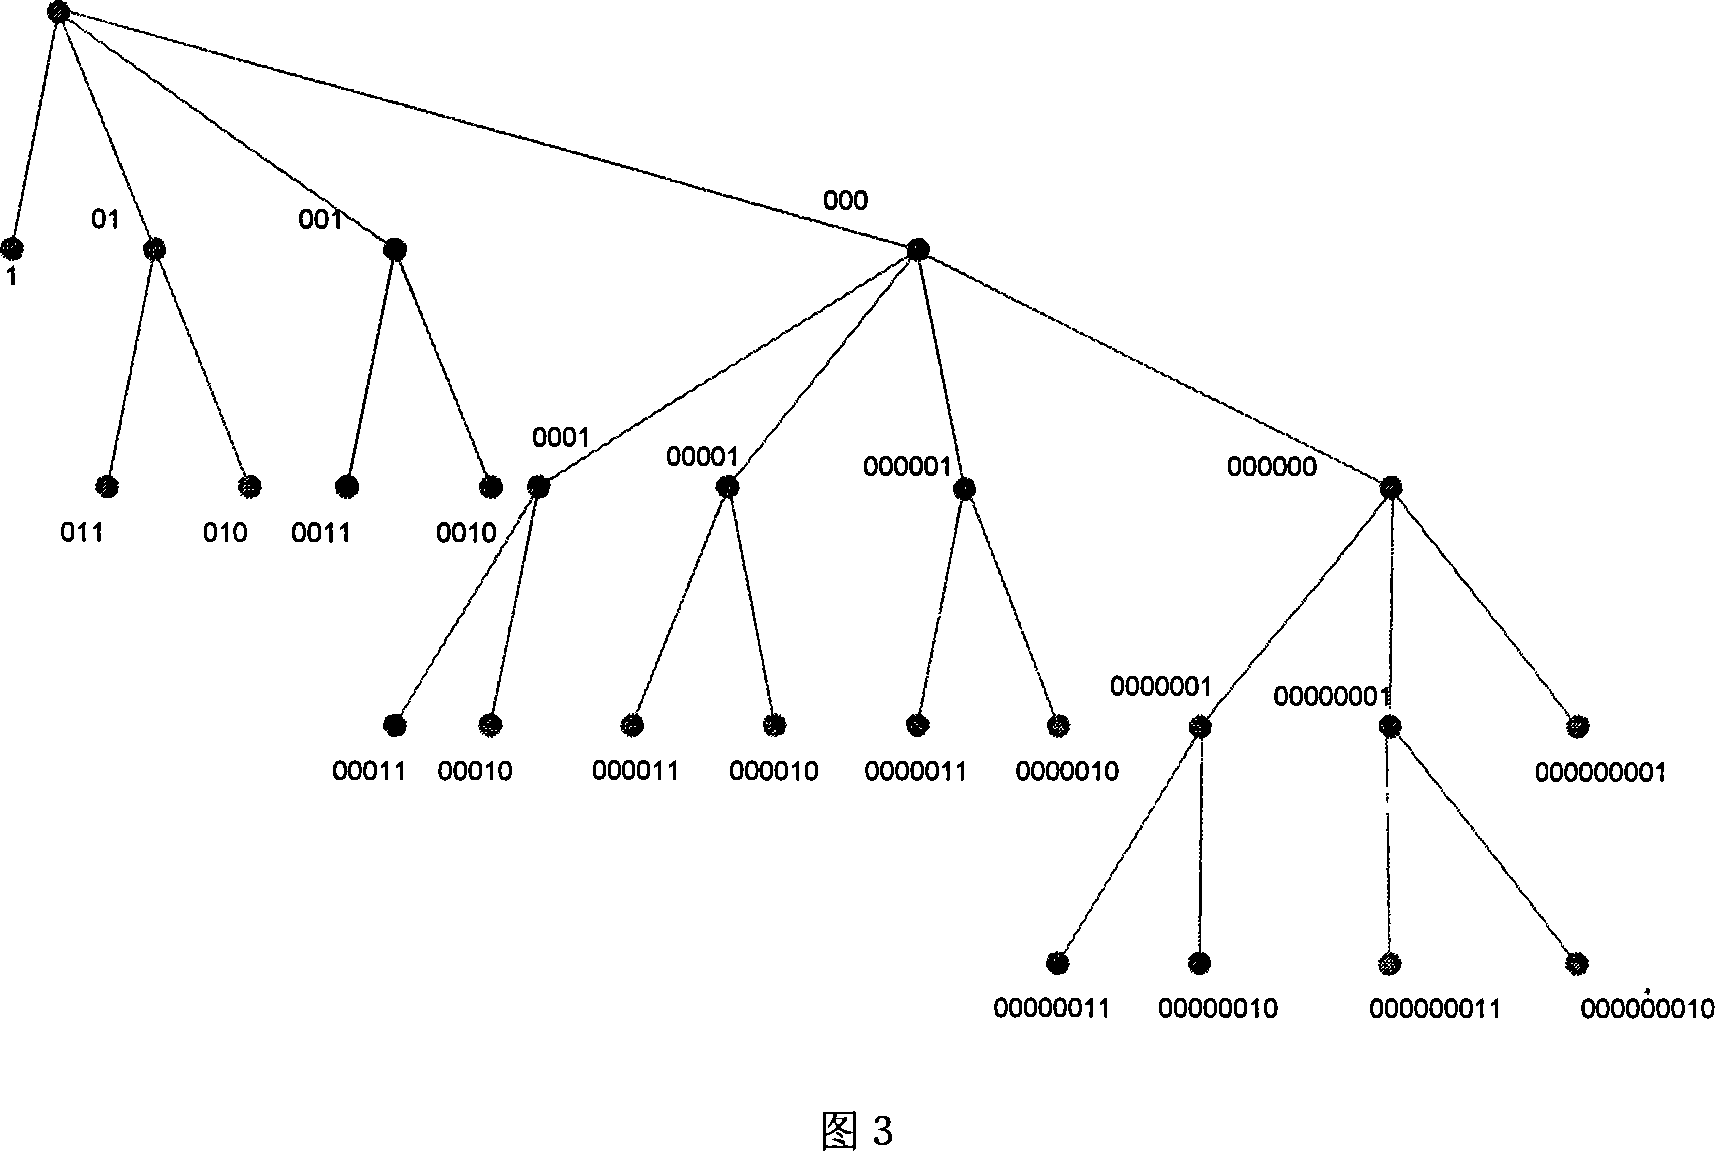 Variable-length code decoding method based on zero-prefix code